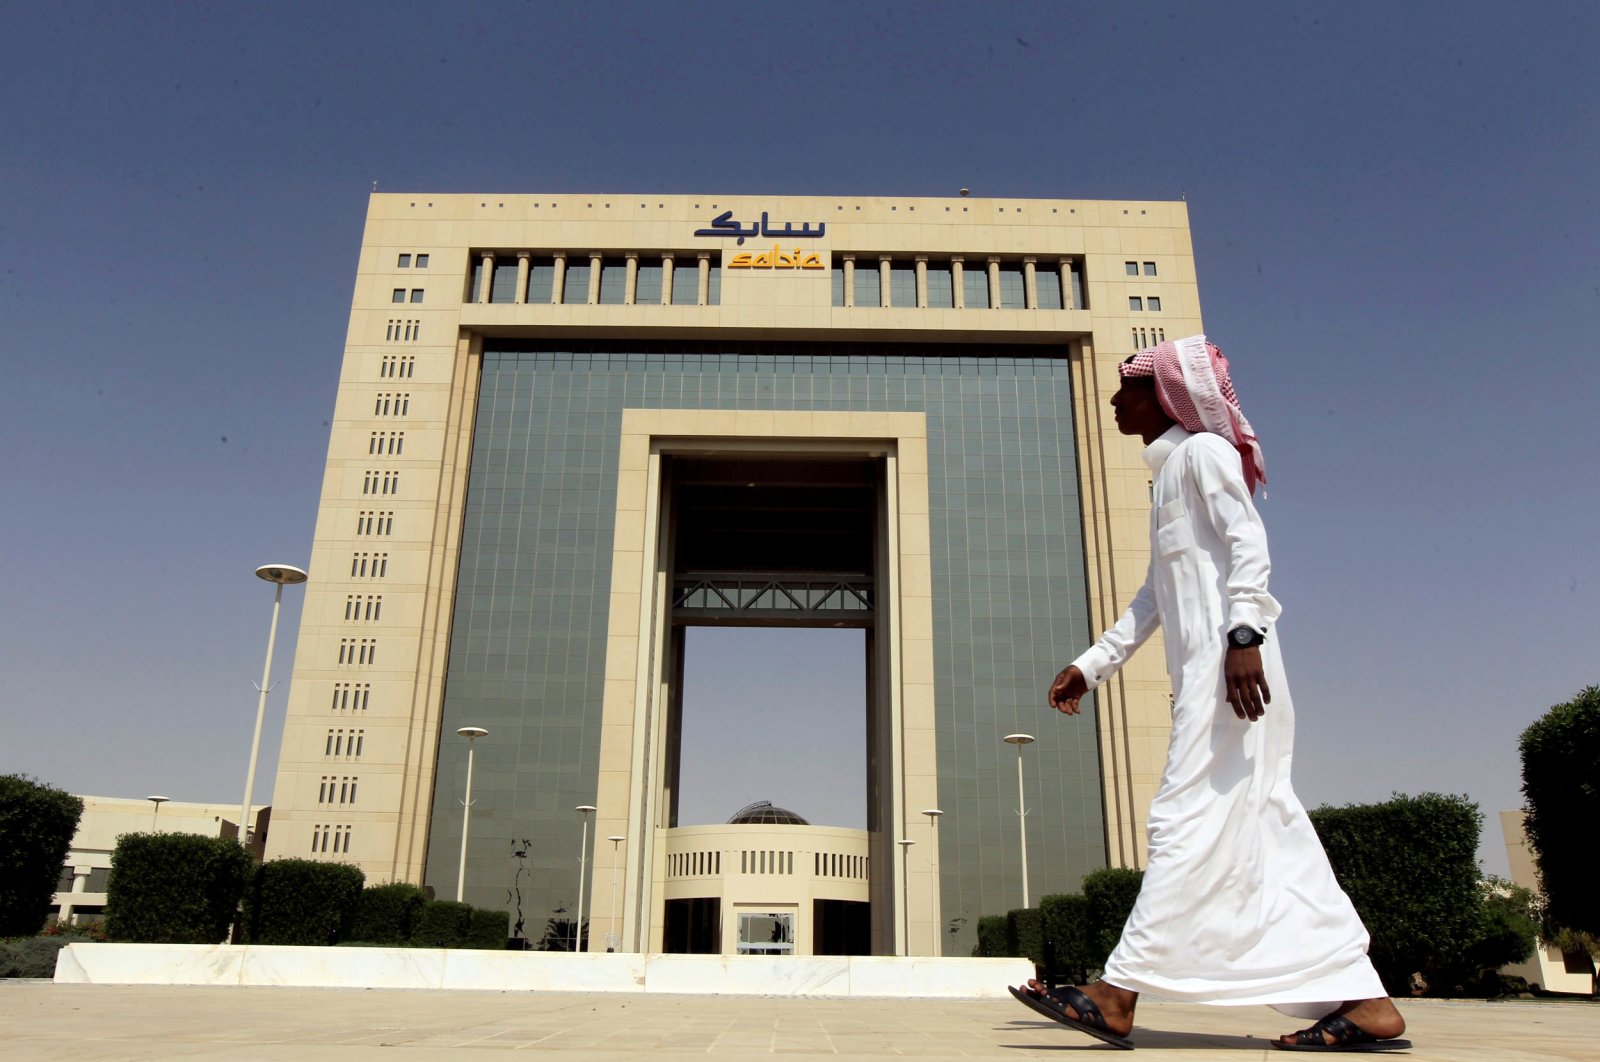 A man walks past the headquarters of Saudi Basic Industries Corp (SABIC) in Riyadh, Saudi Arabia, Oct. 27, 2013. (Reuters Photo)